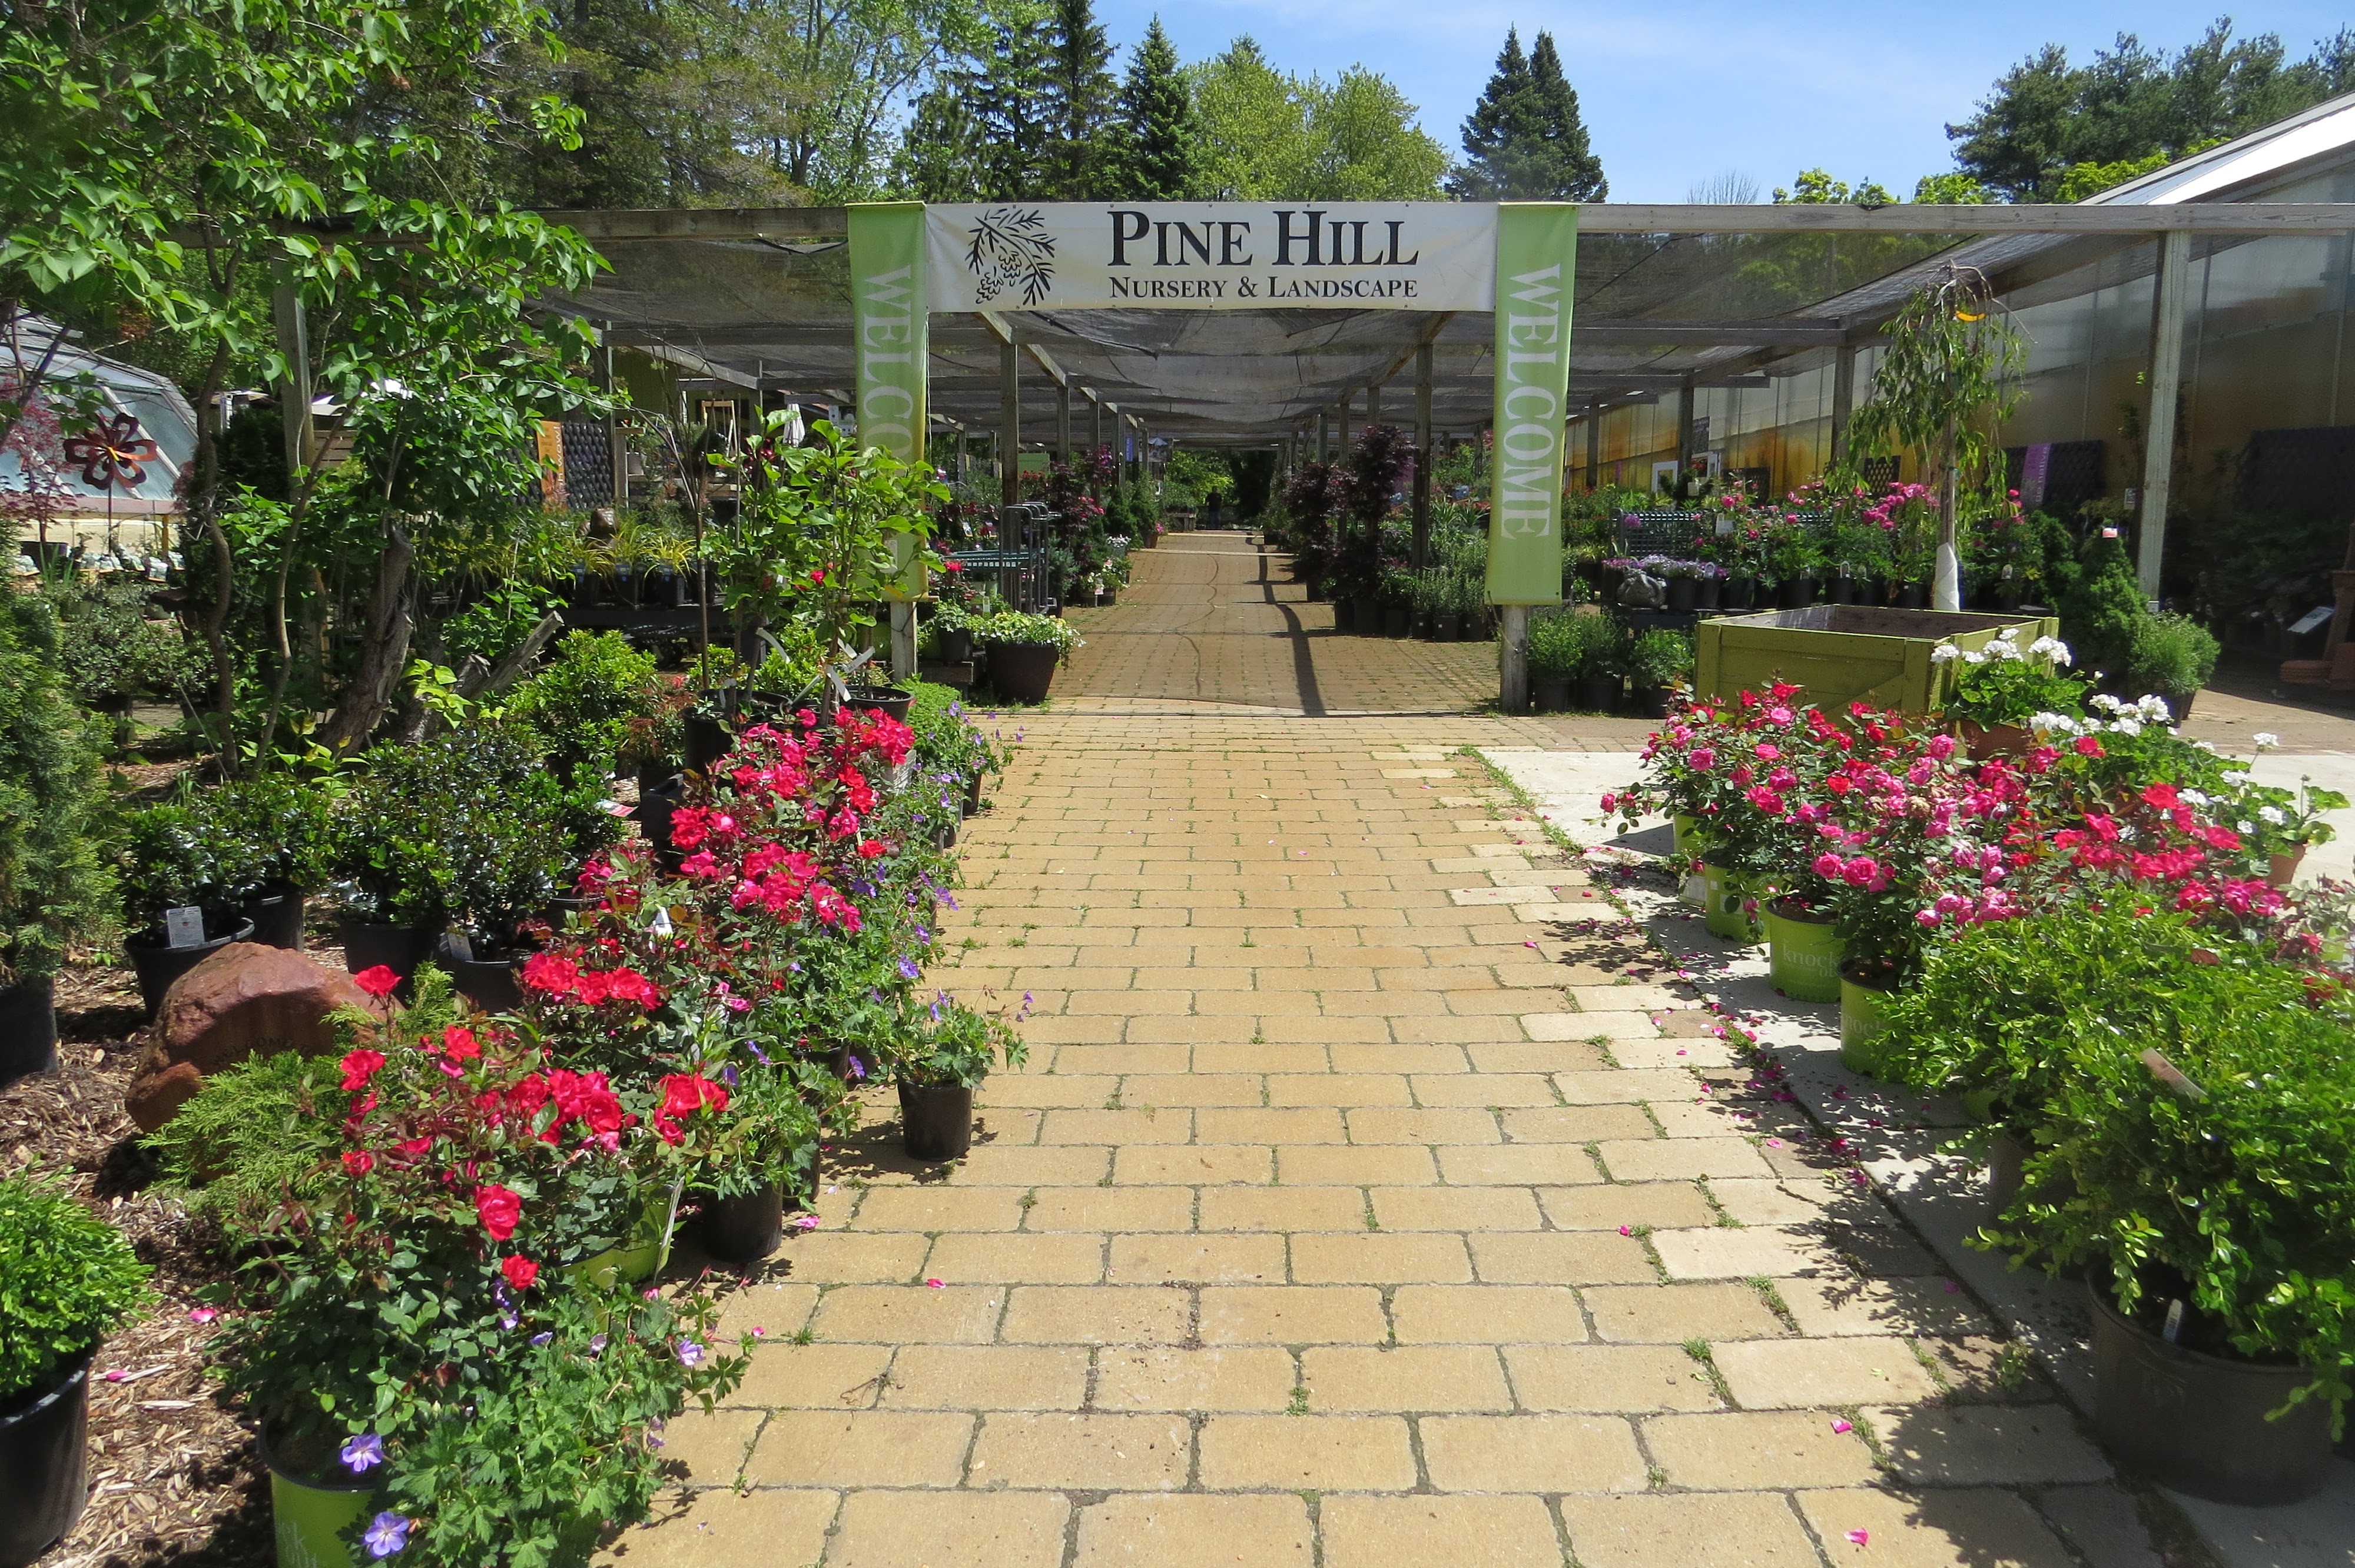 Pine Hill Nursery entrance